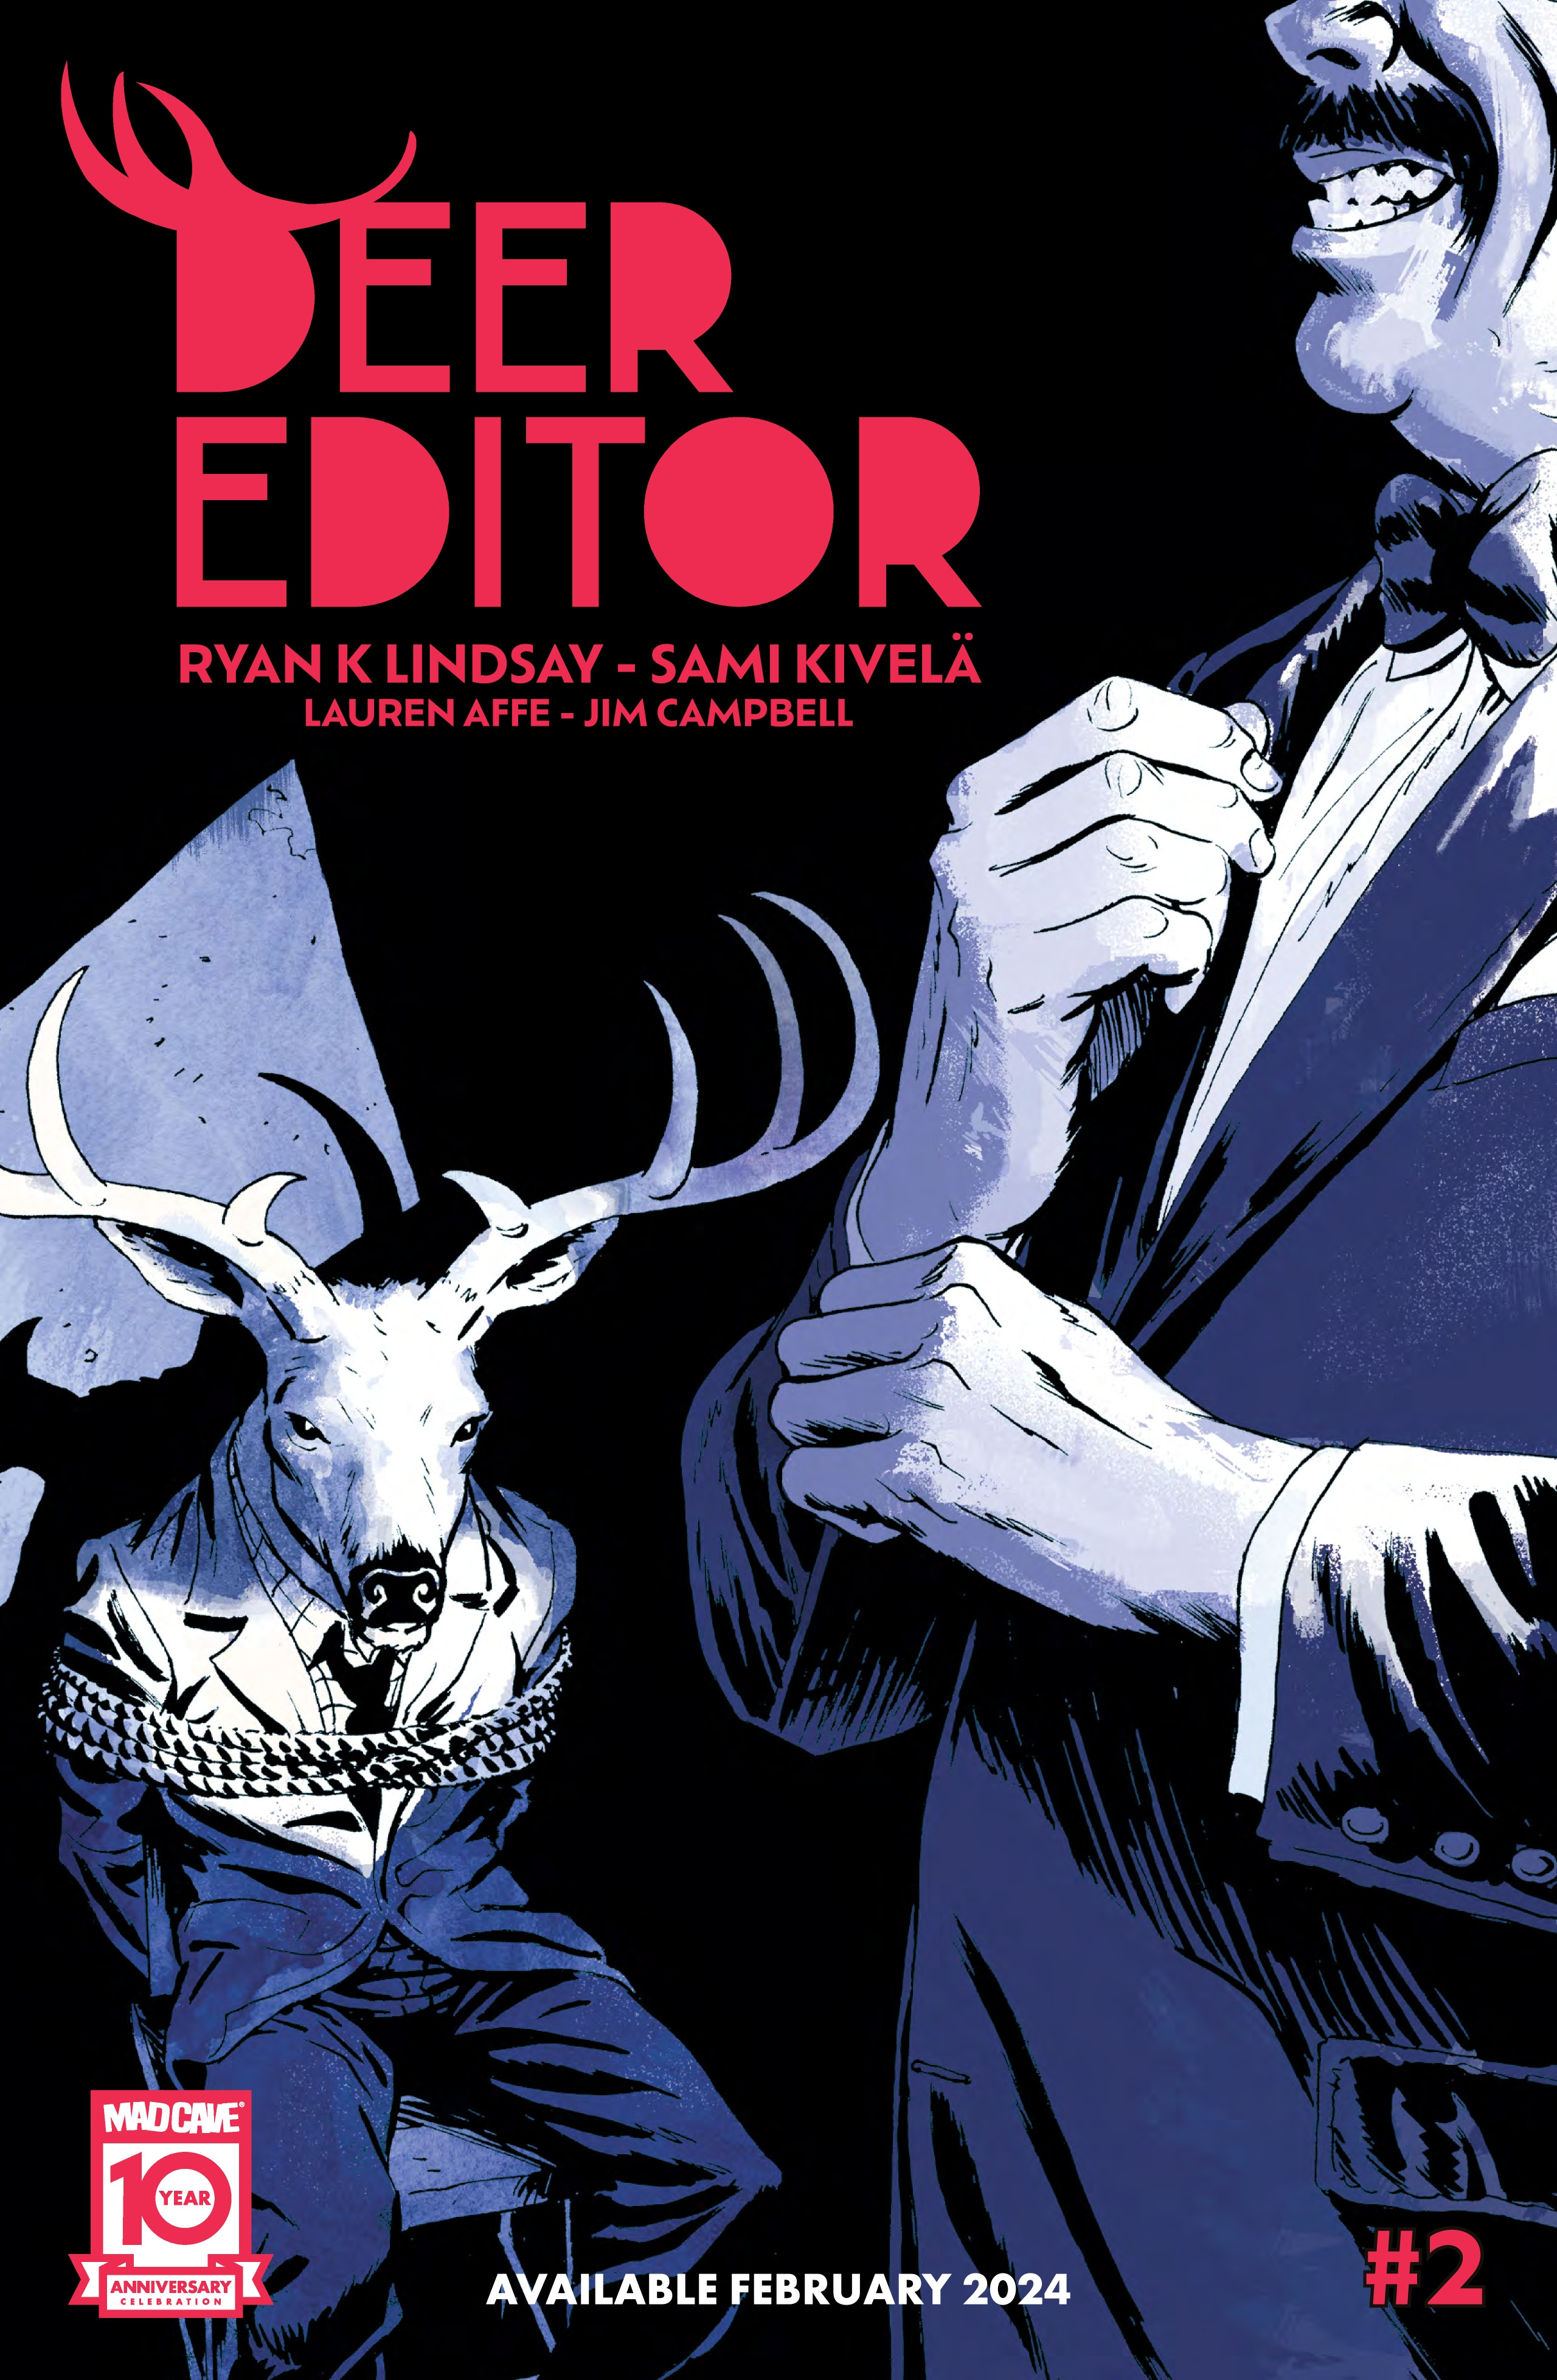 Read online Deer Editor comic -  Issue #1 - 27